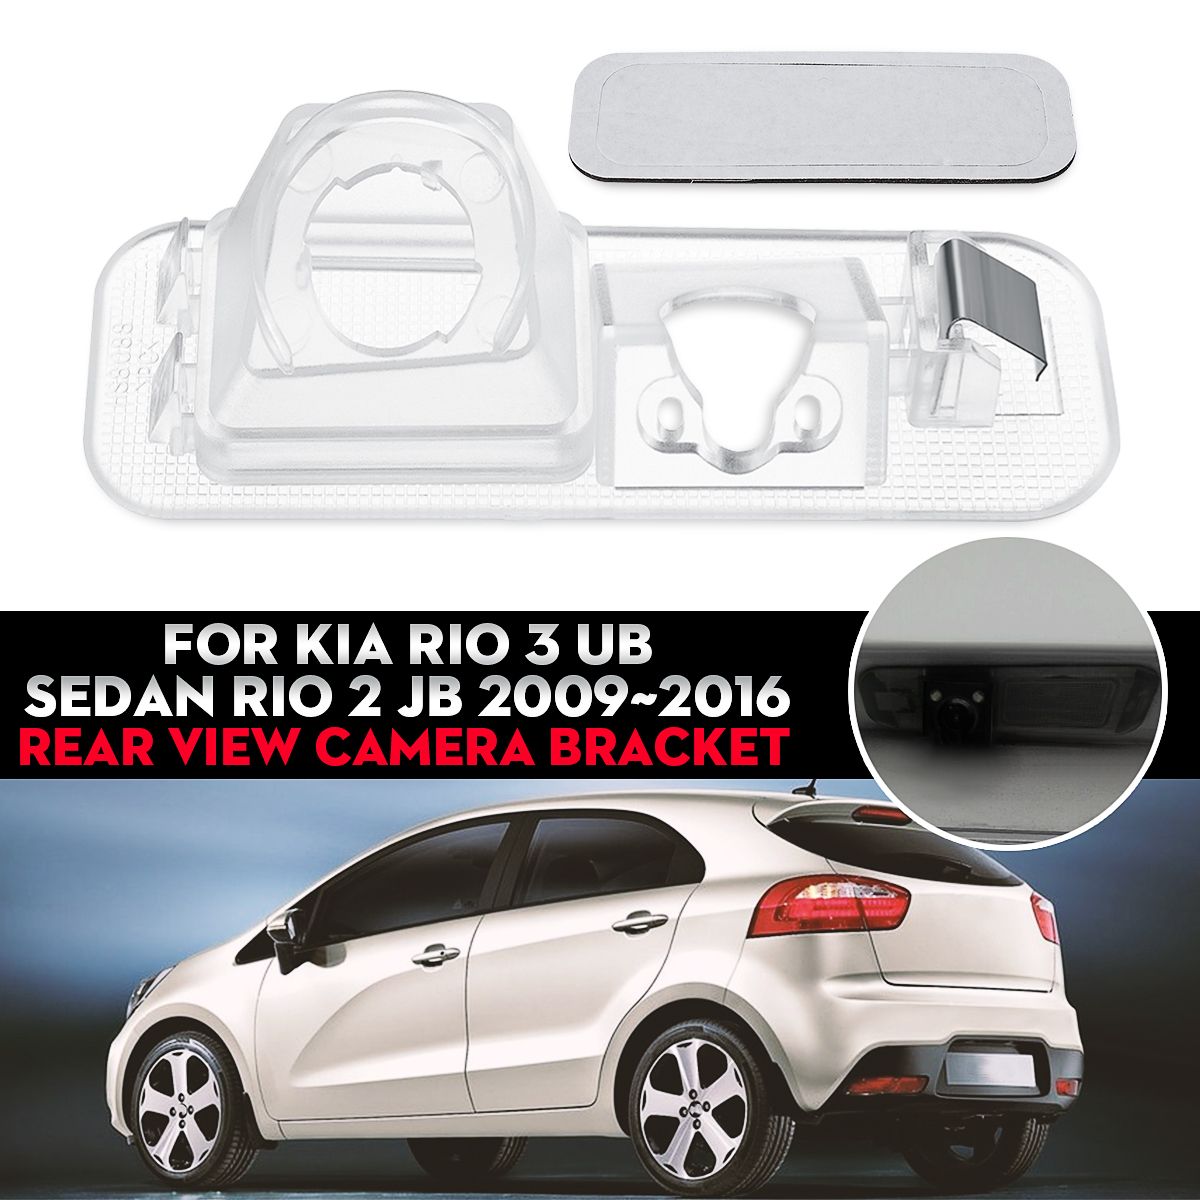 Rear-view-Camera-Bracket-License-Plate-Kit-For-Kia-Rio-3-UB-Sedan-Rio-2-JB-09-16-1711788